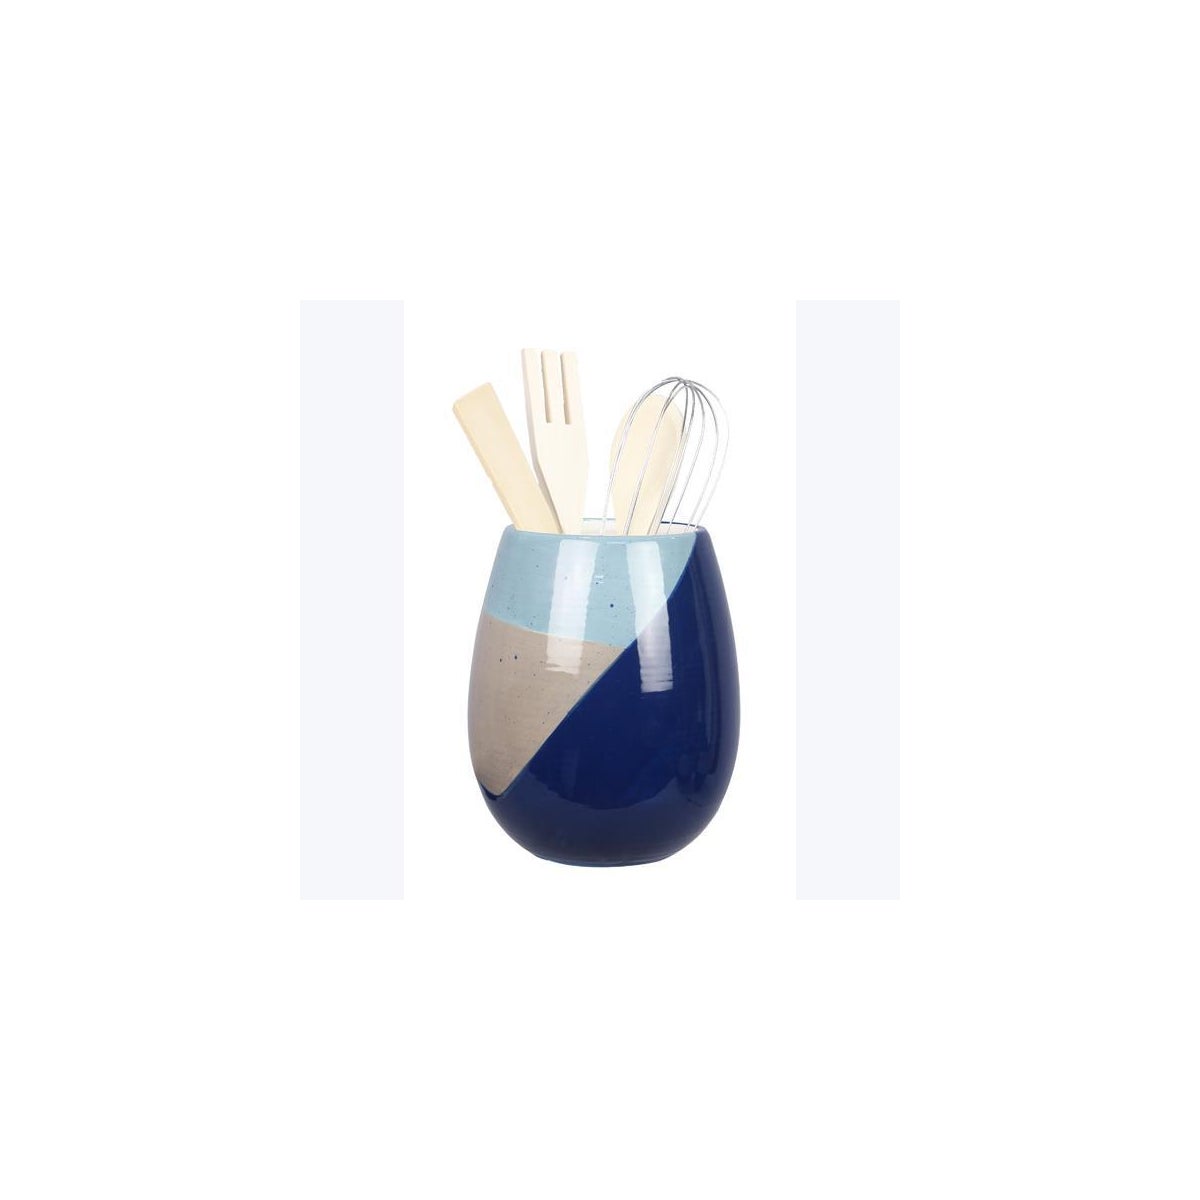 Ceramic Artistic Blue Tool Holder with Tools